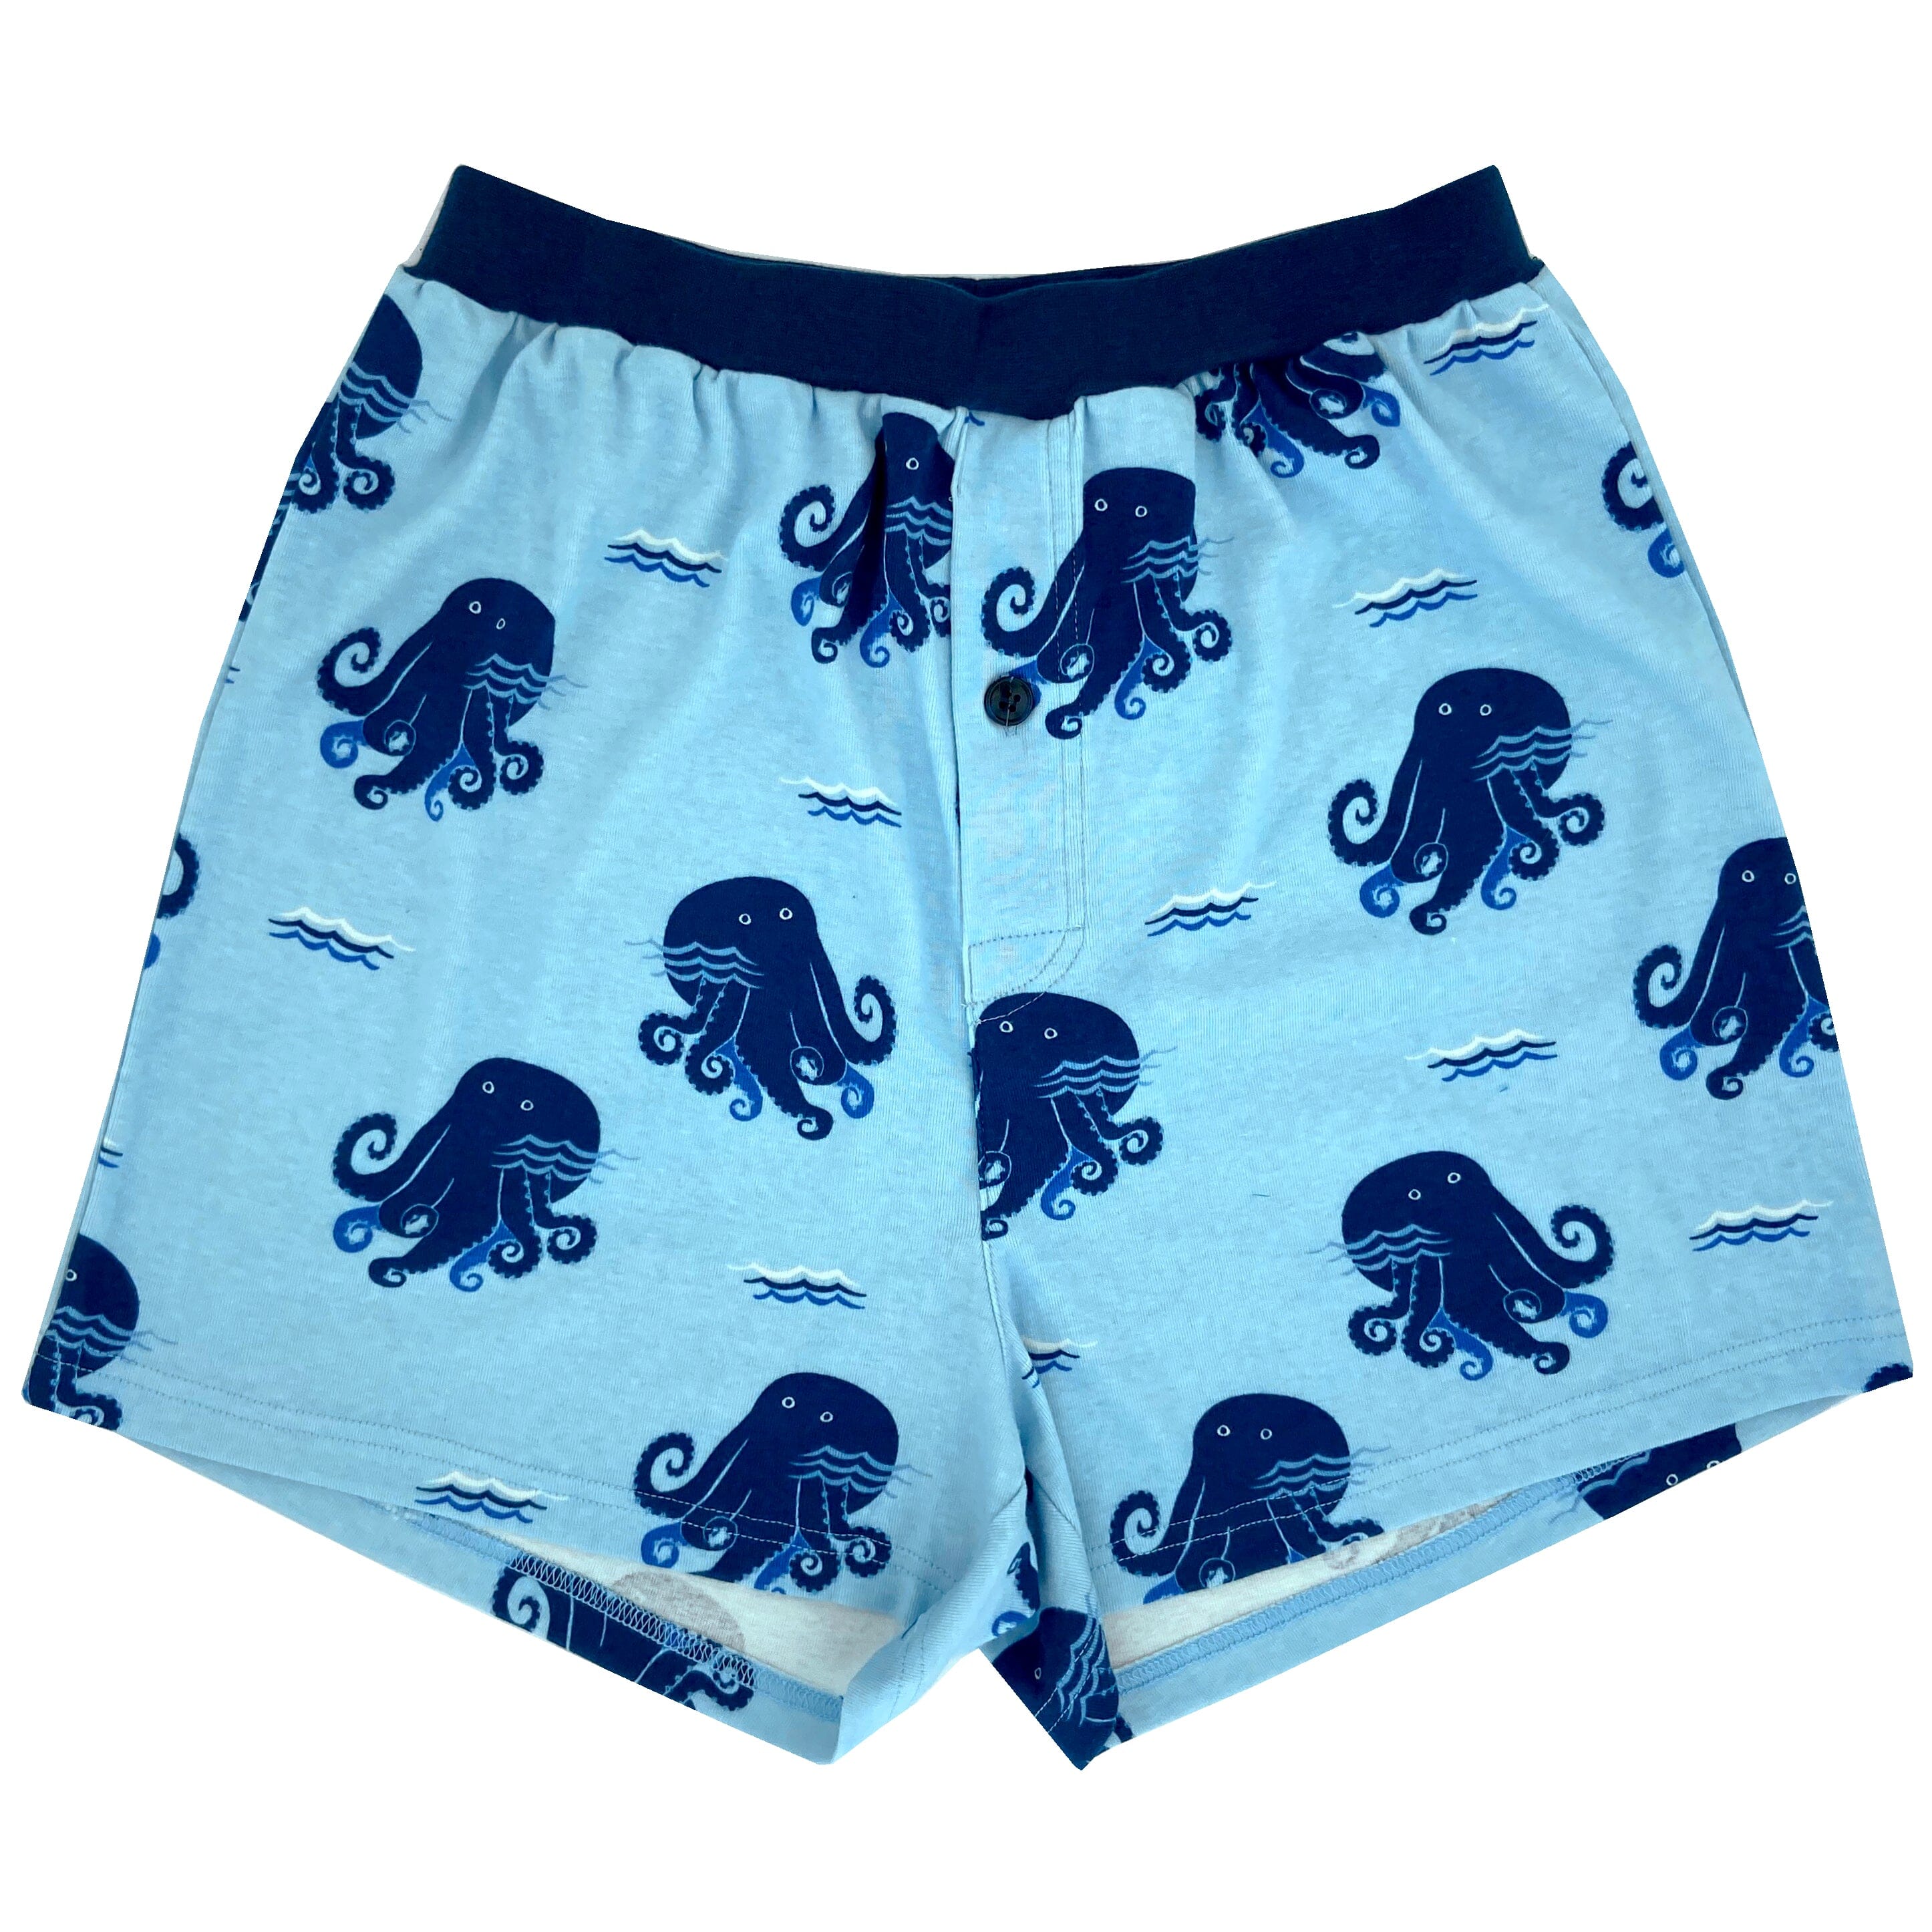 Men's Octopus Squid Patterned Super Comfy Knit Boxer Pajama Shorts